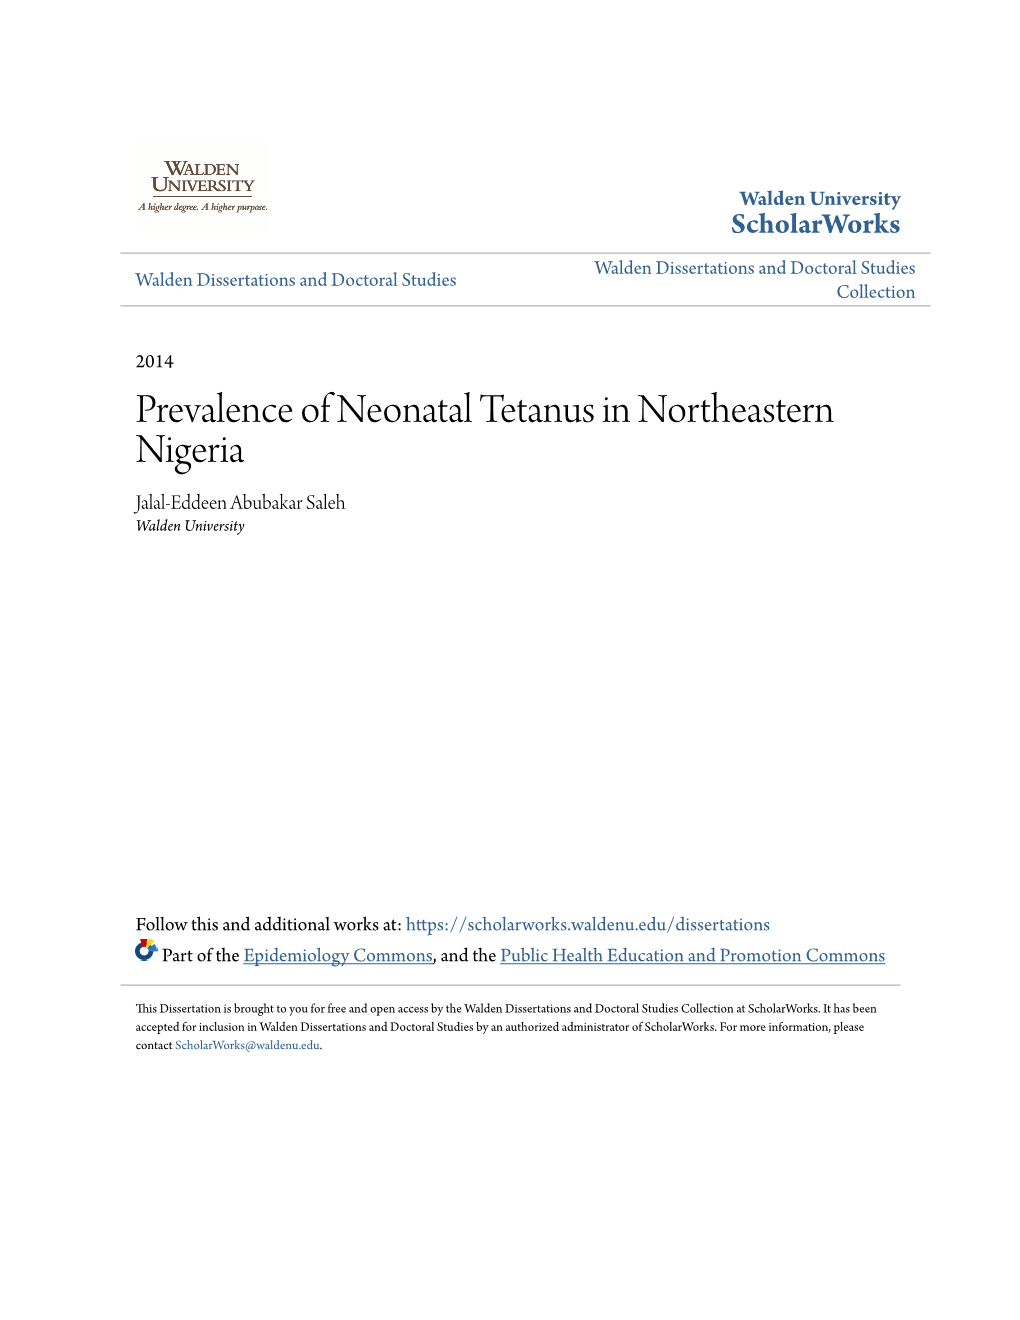 Prevalence of Neonatal Tetanus in Northeastern Nigeria Jalal-Eddeen Abubakar Saleh Walden University